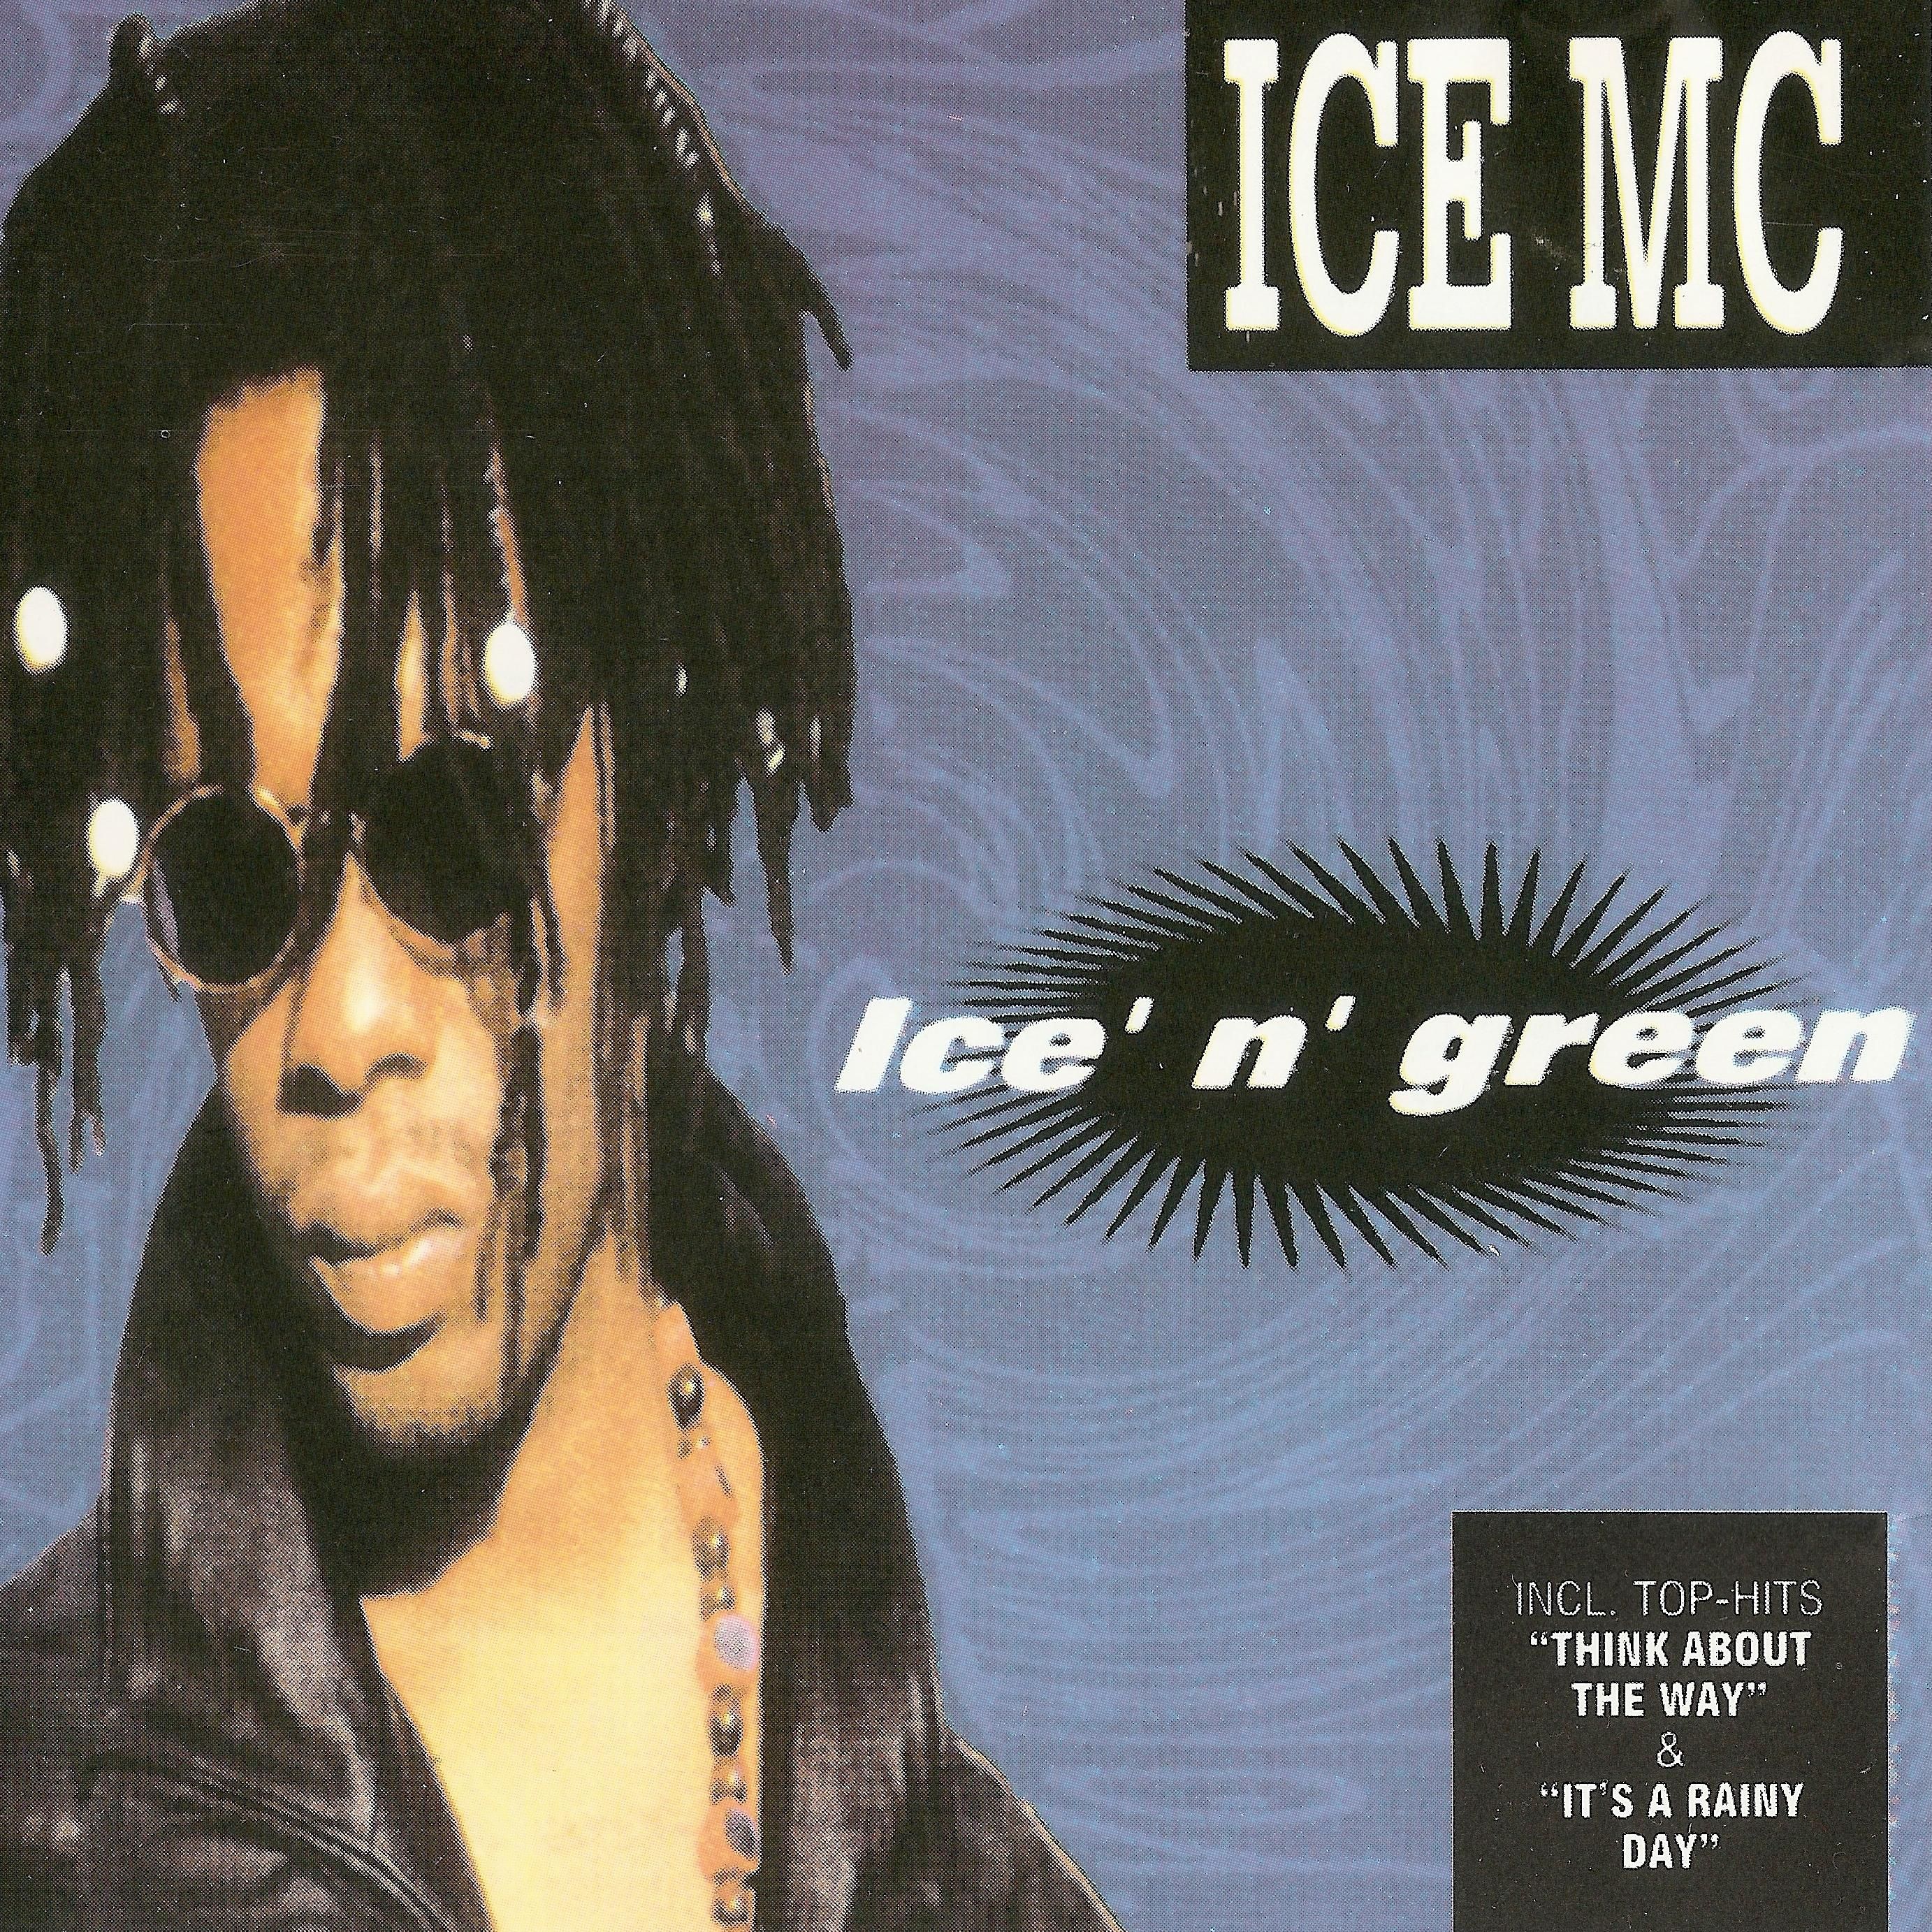 Ice mc feat. Ice MC Ice n Green обложка. Ice MC Ice n Green 1994. Ice MC - Ice’ n’ Green CD.